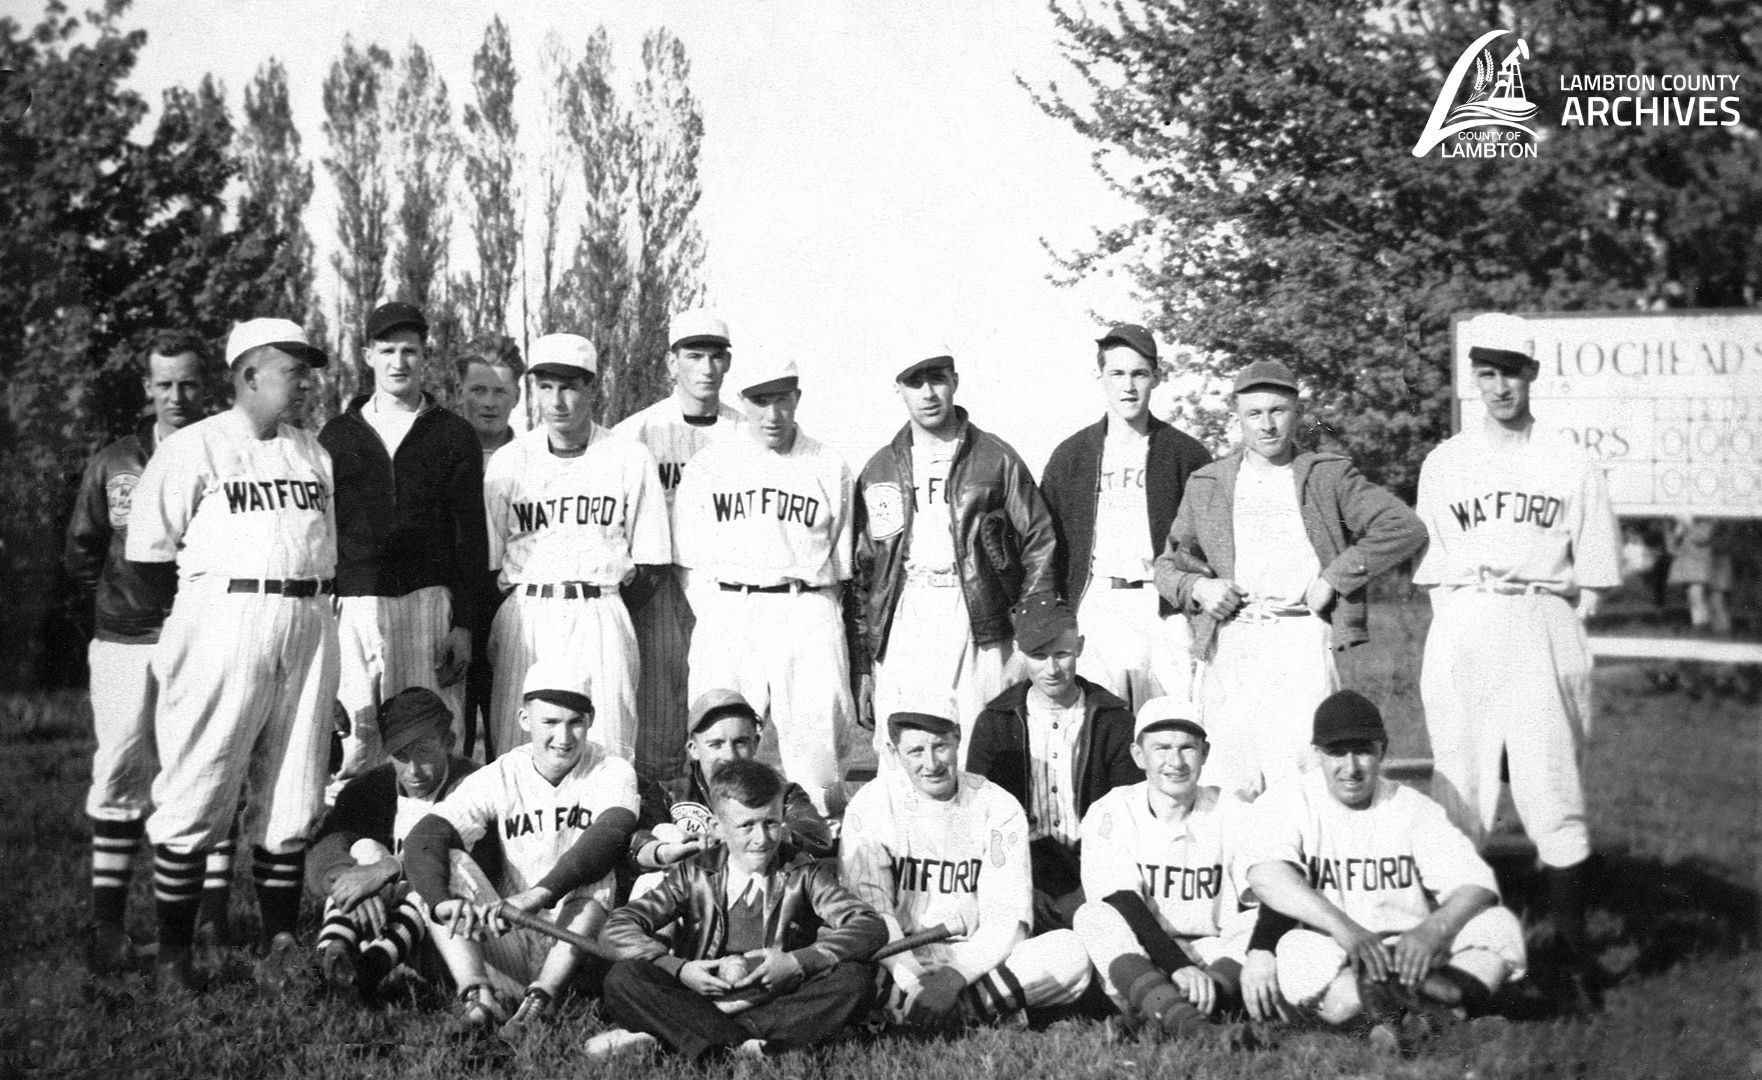 Watford Baseball Team